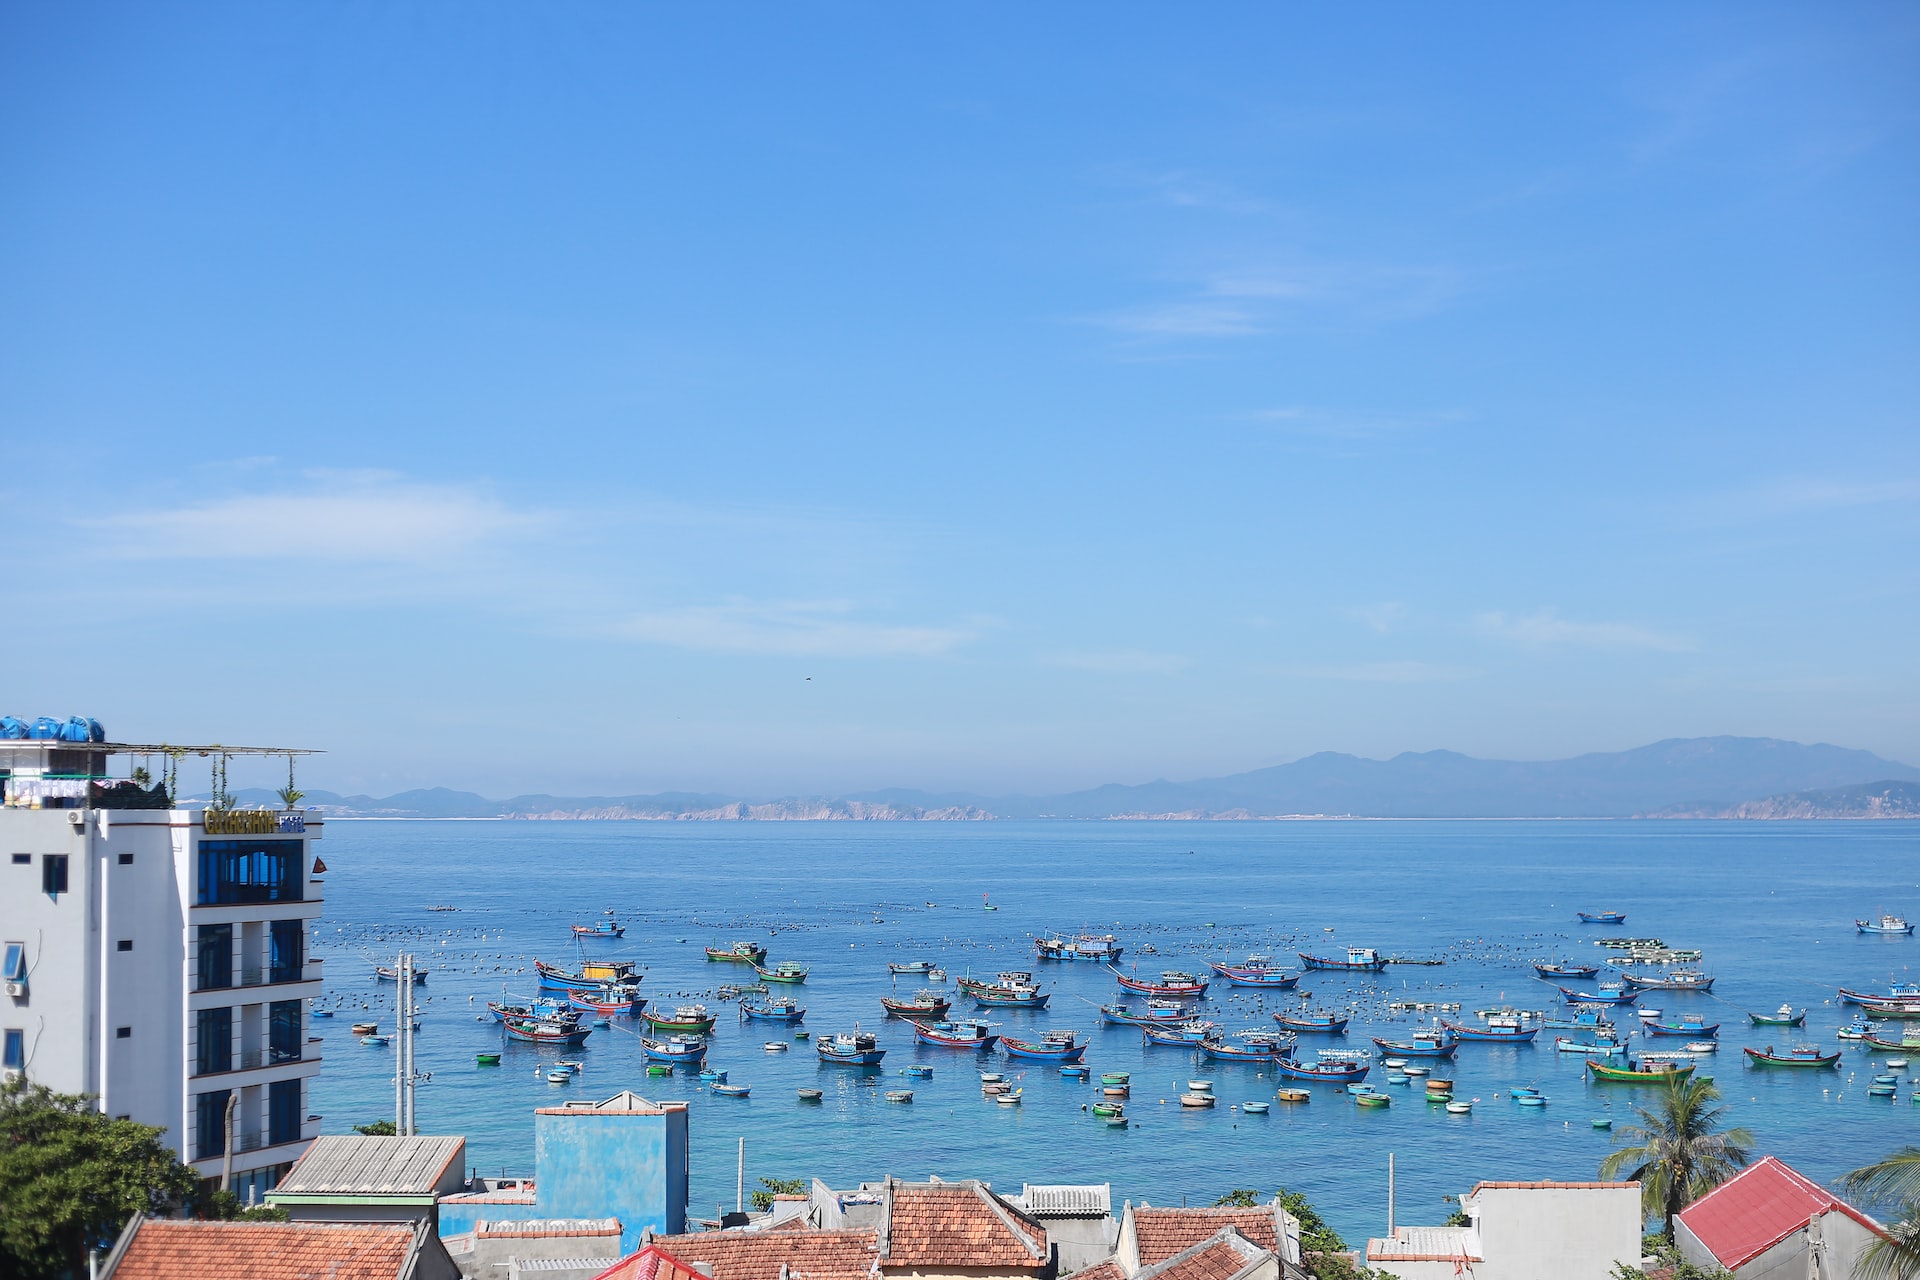 beautiful seaside city of Quy Nhon hidden gems in vietnam
